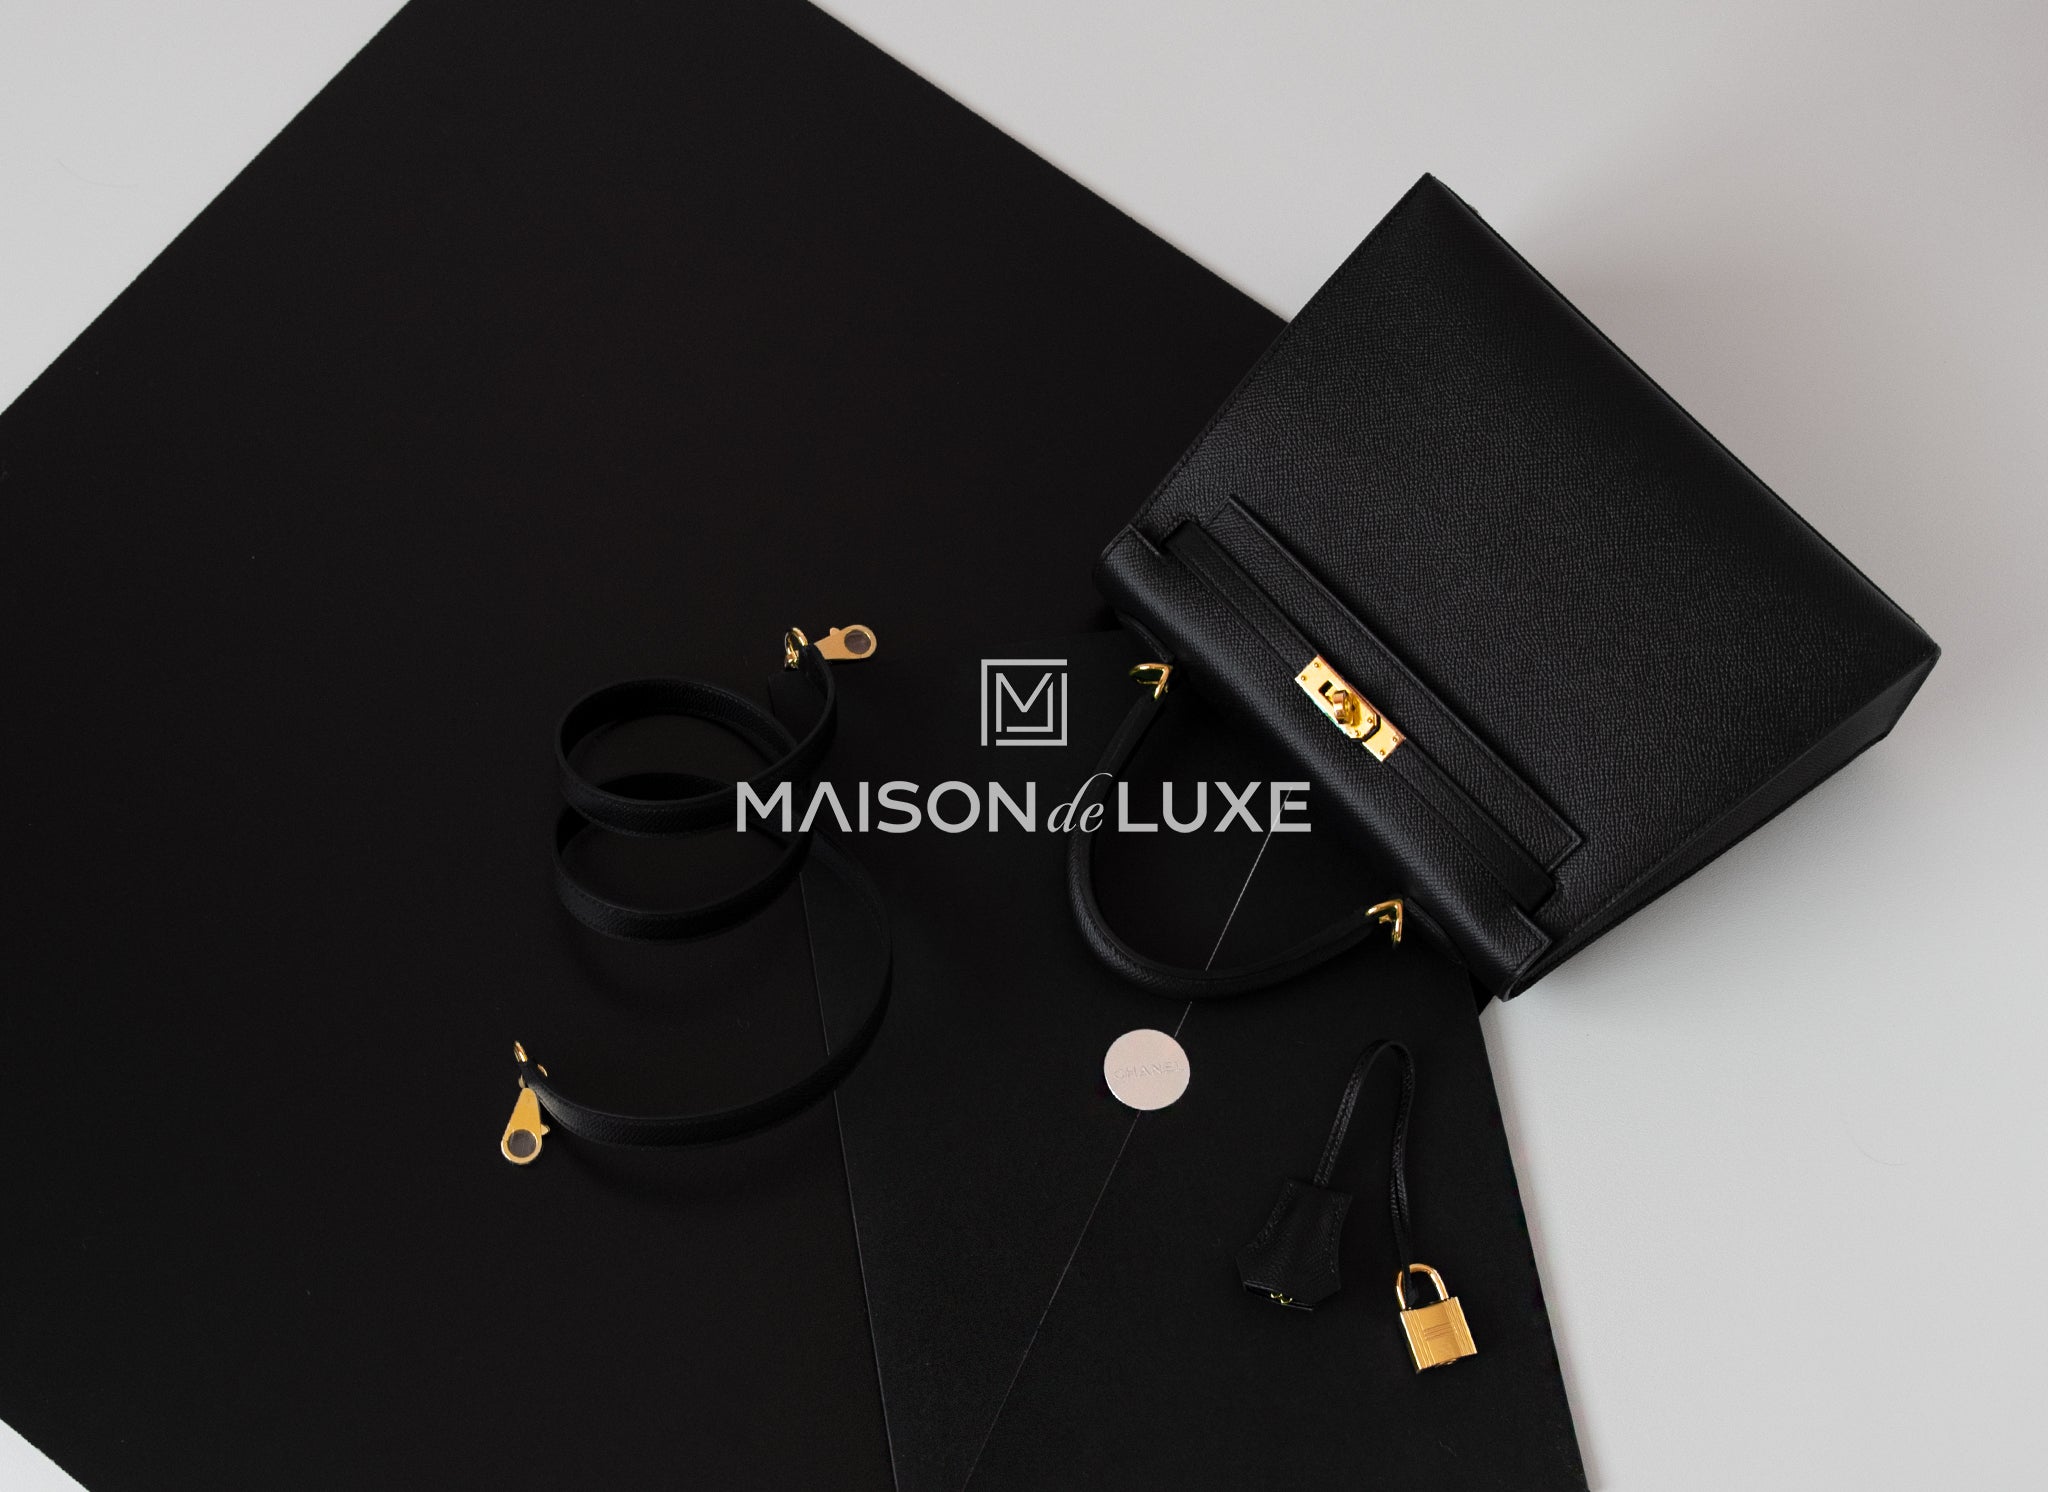 Hermès Kelly 25 Noir (Black) Sellier Epsom Gold Hardware GHW